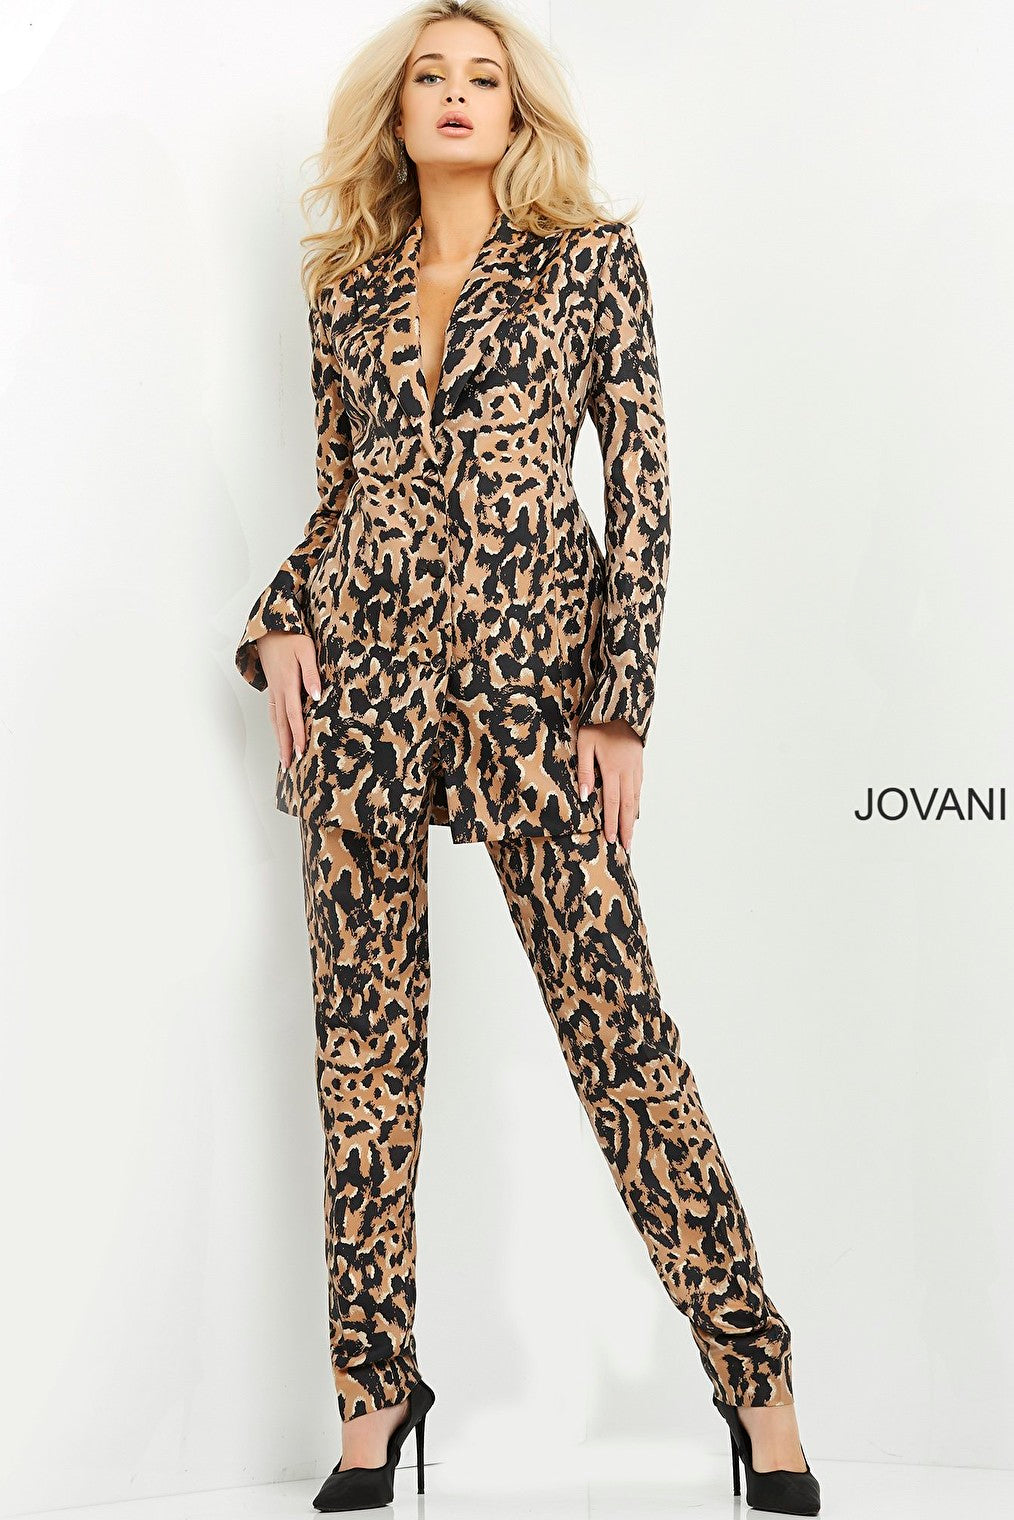 Animal print Jovani pant suit 03840